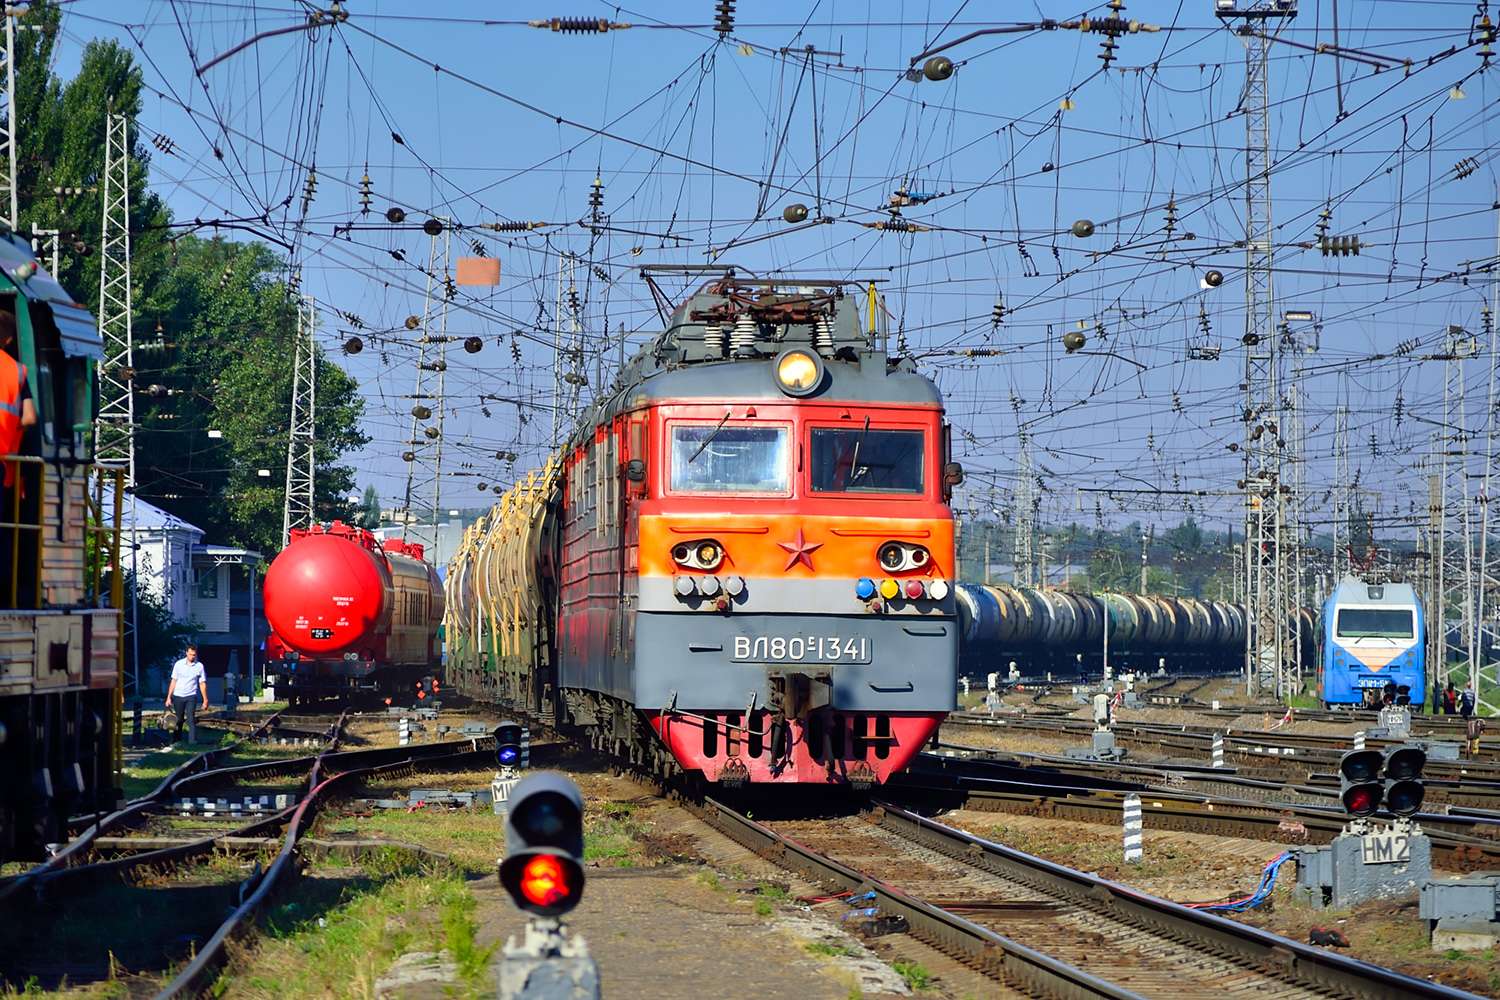 locomotora eléctrica vl 80s-1341 puzzle online a partir de foto